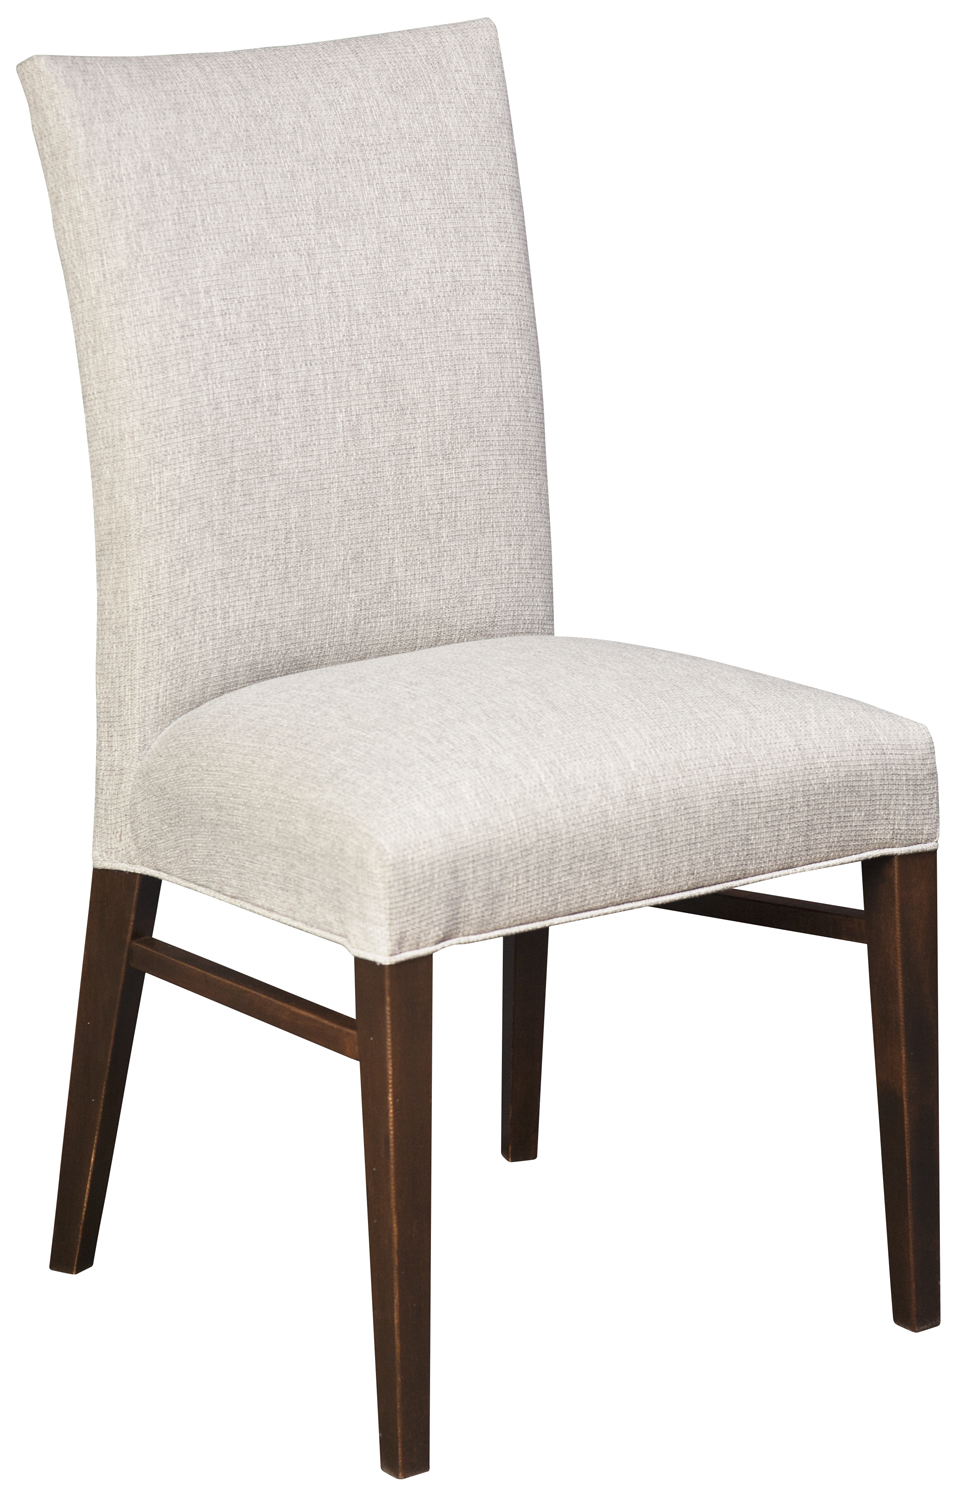 Fairfield Chair Image